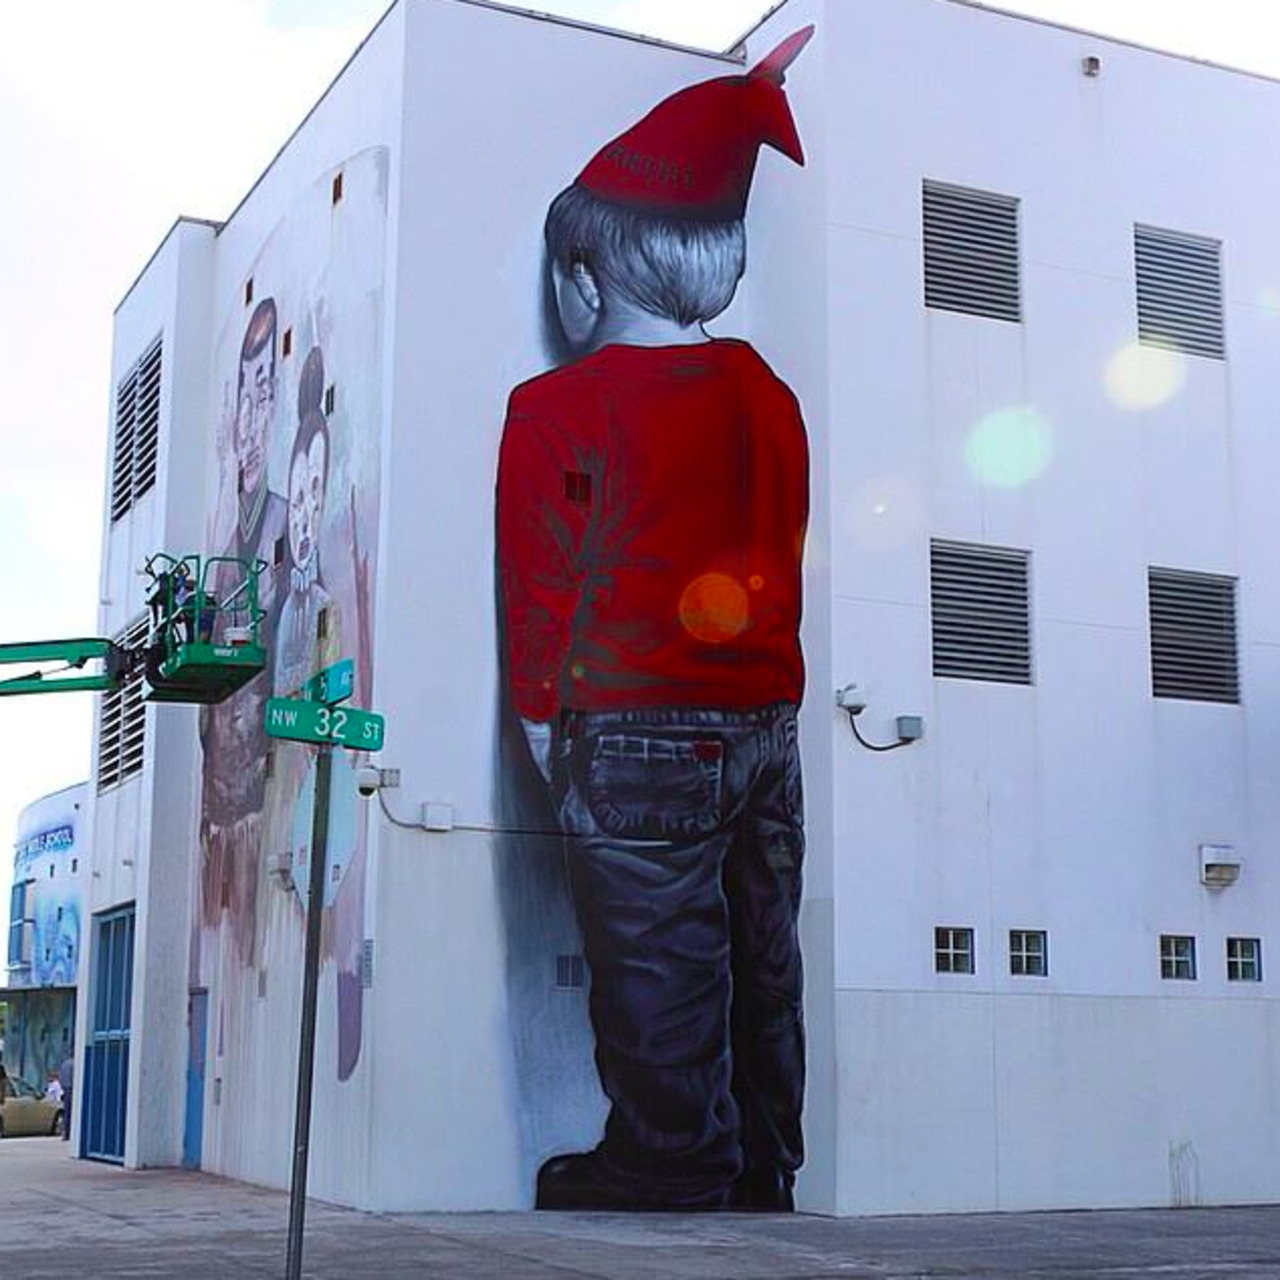 #Streetart by MTO #Wynwood #Miami #Florida #art 
http://streetartunitedstates.com/sitemap/ http://t.co/7dYgLtZqf0